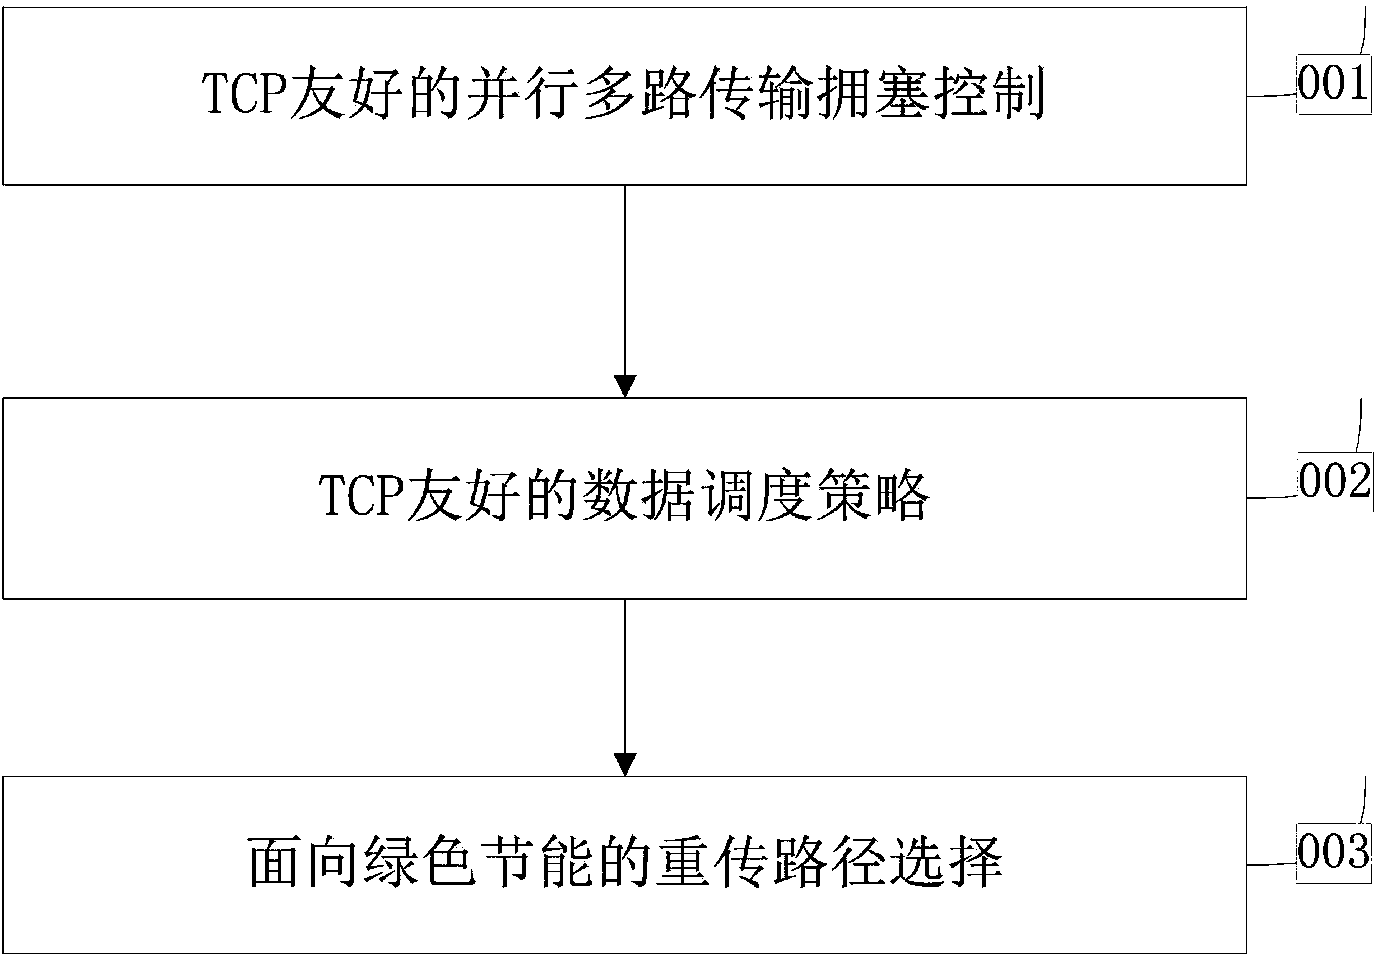 Multichannel transmission control mechanism based on TCP friendliness